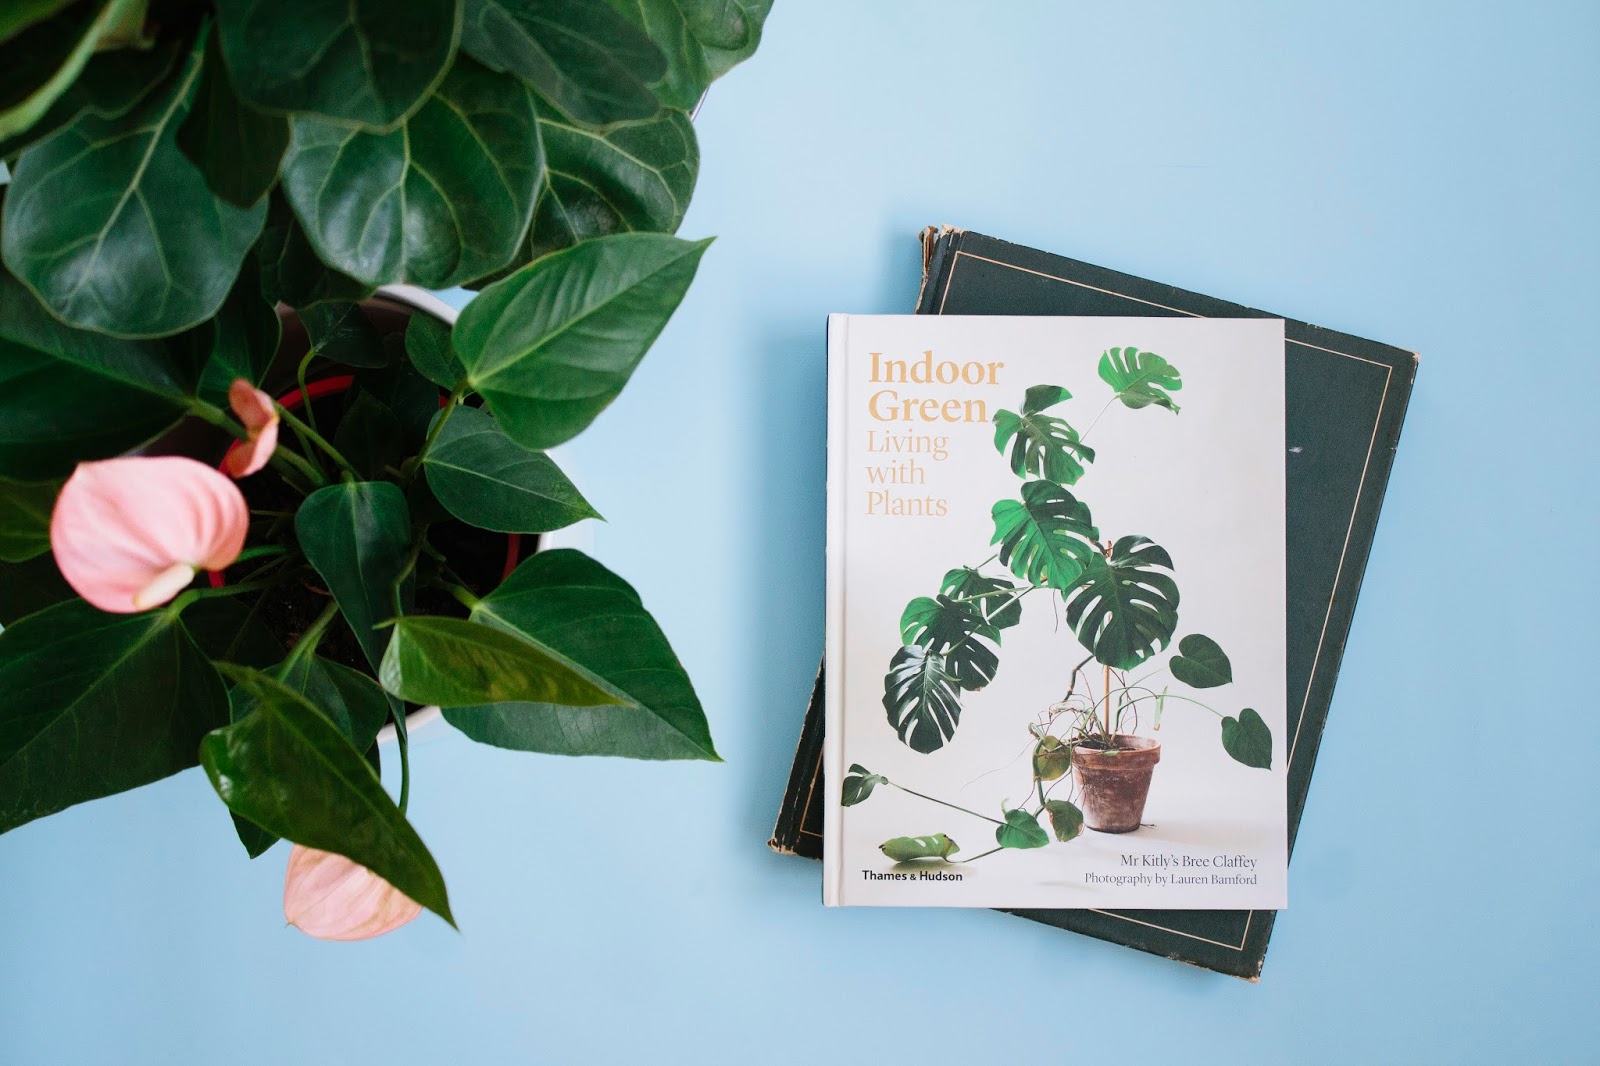 Books About Plants